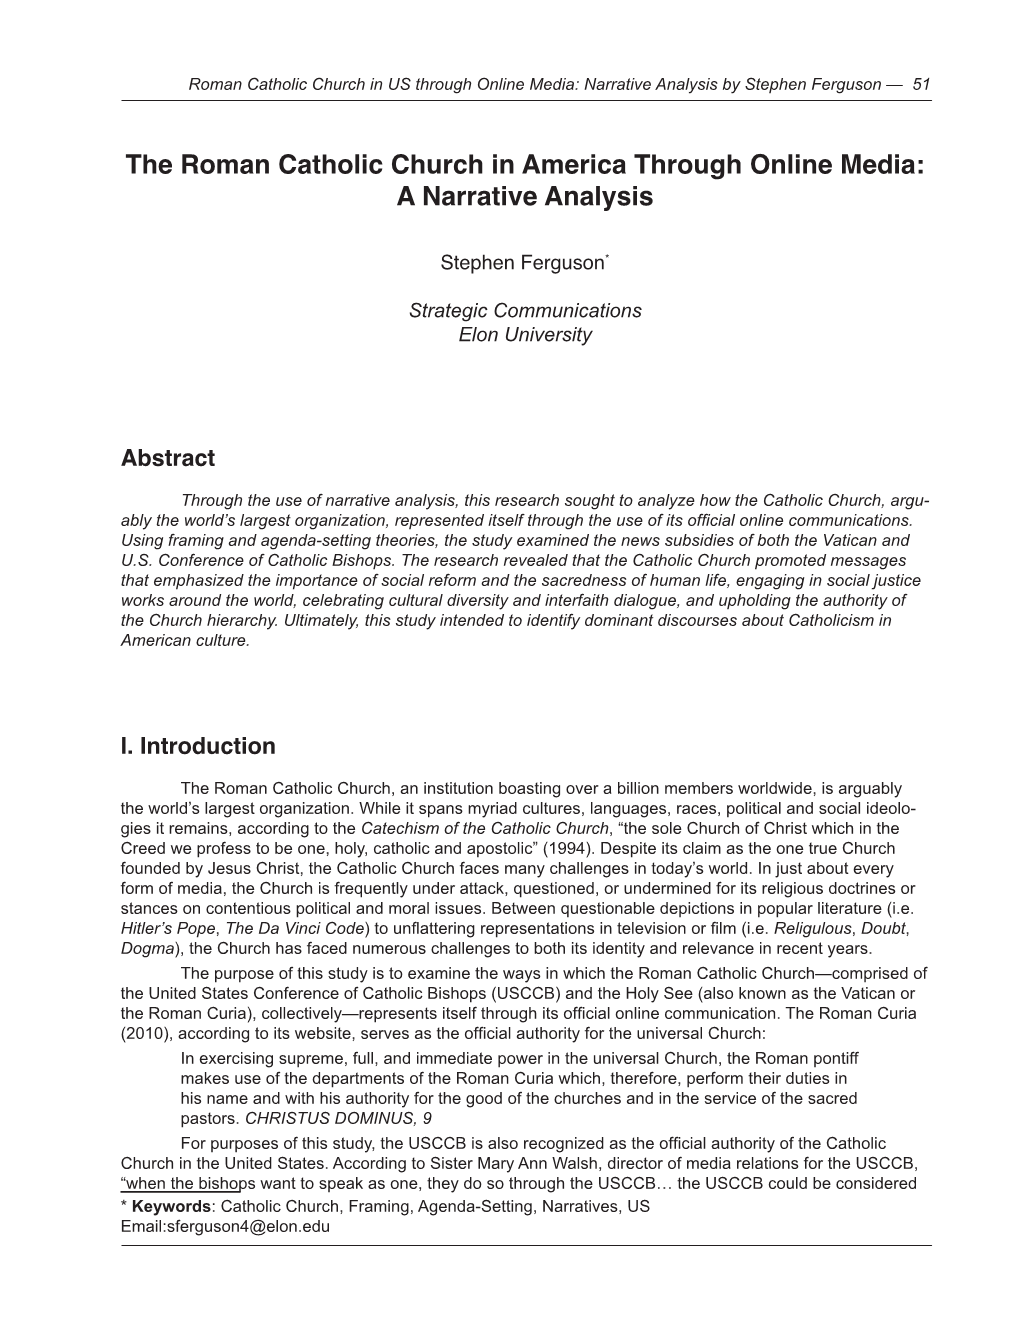 The Roman Catholic Church in America Through Online Media: a Narrative Analysis